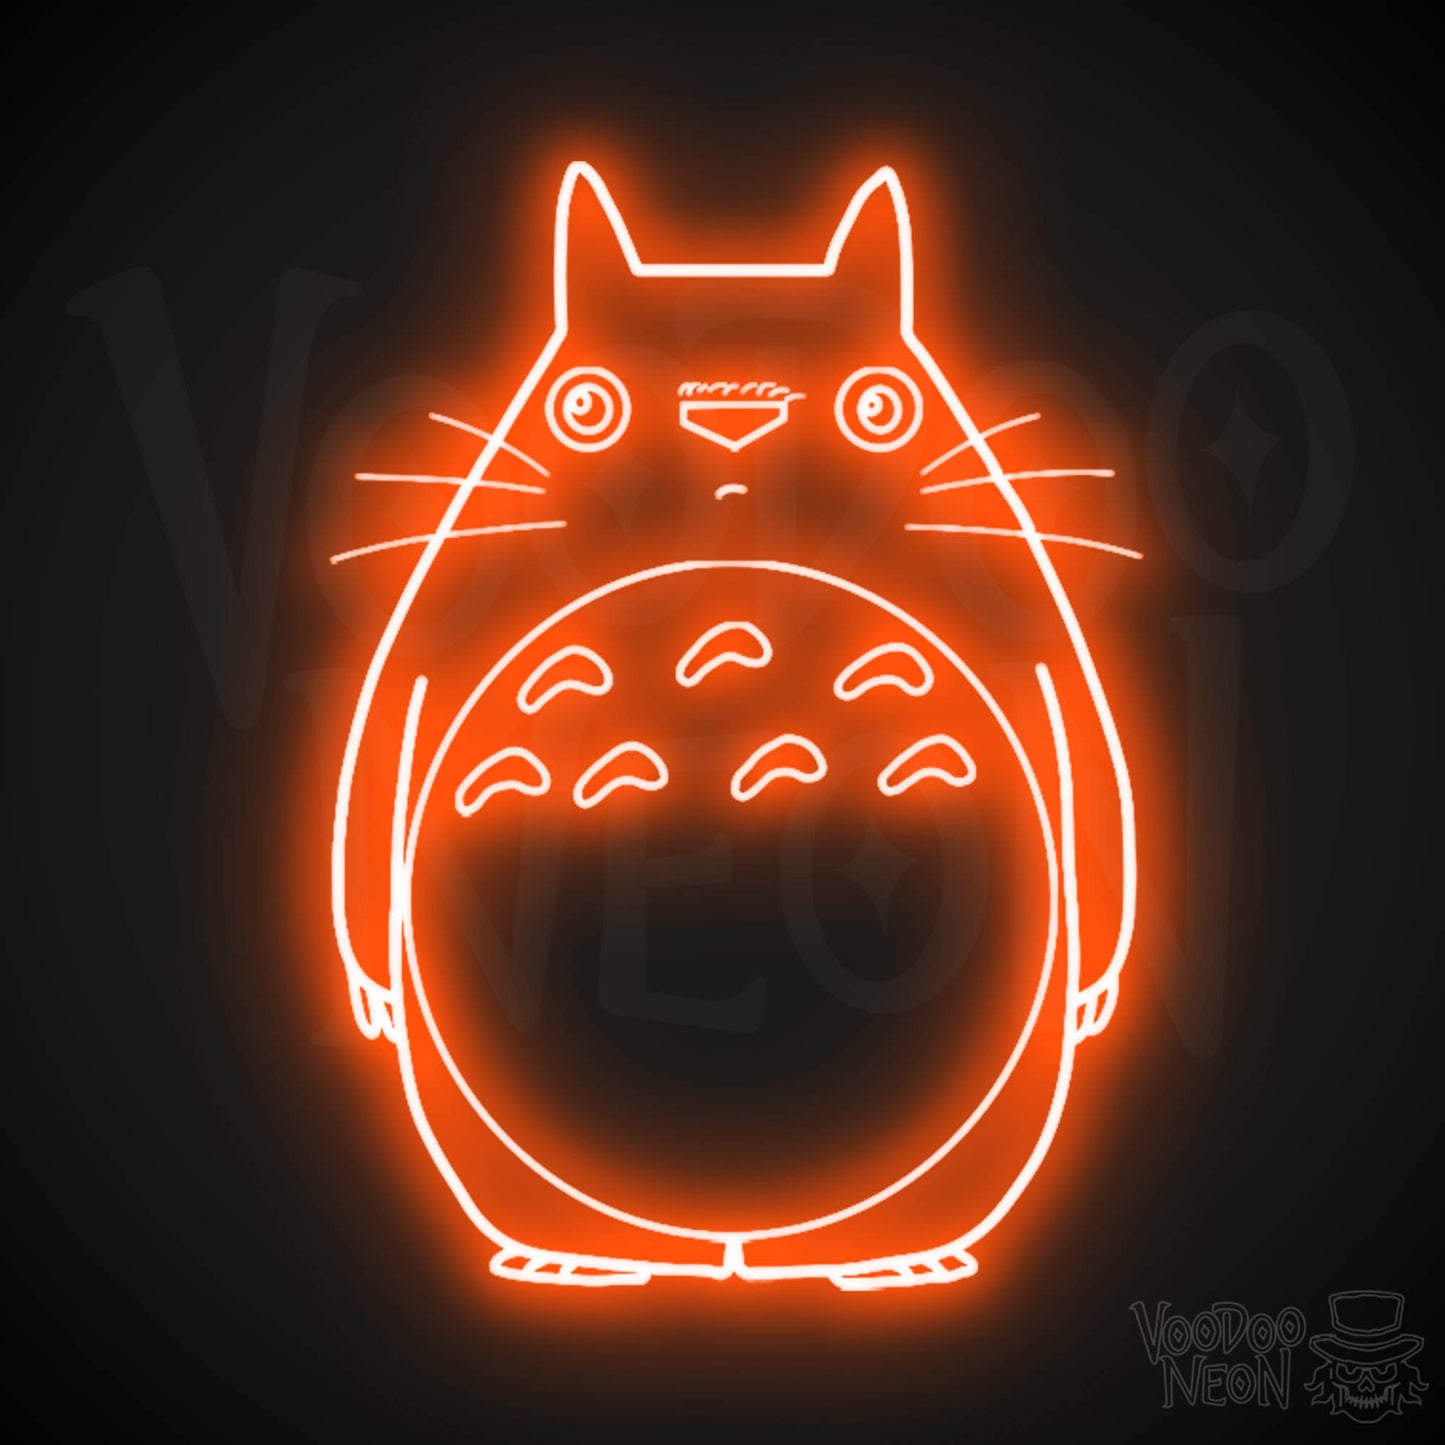 Totoro Neon Wall Art - Neon Totoro Sign - Totoro Neon Sign - LED Wall Art - Color Orange